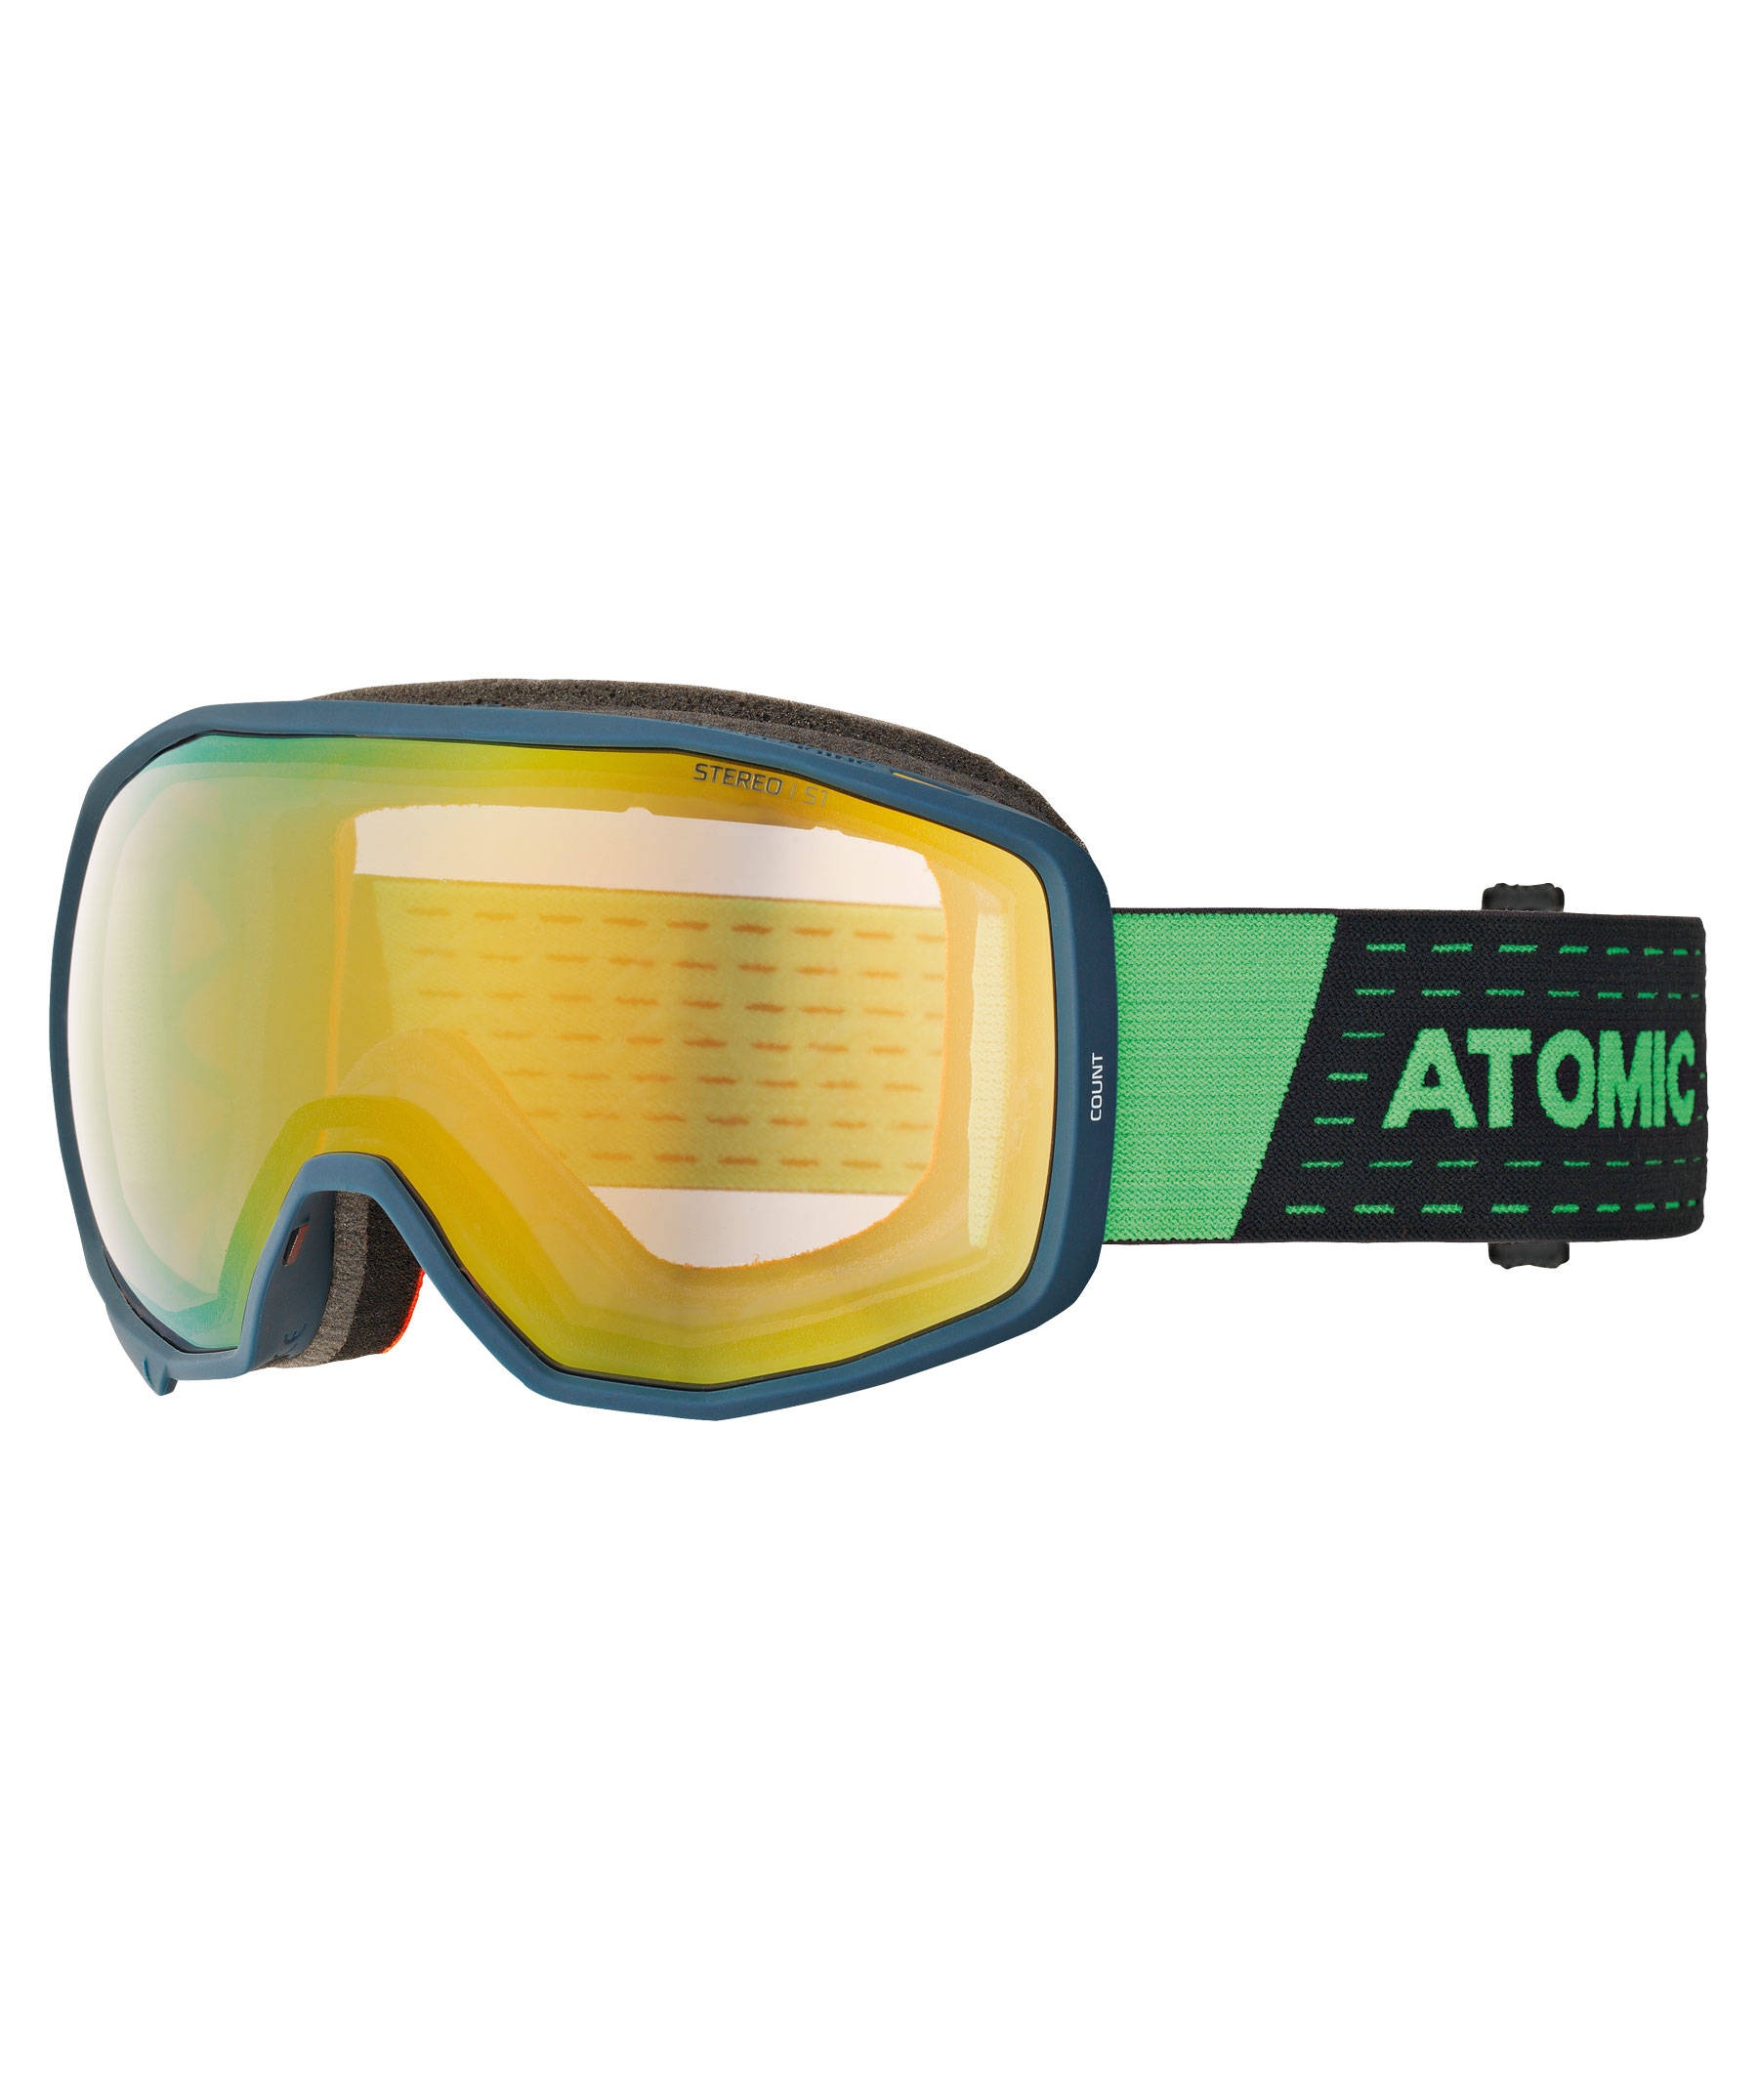 Atomic Skibrille / Snowboardbrille 